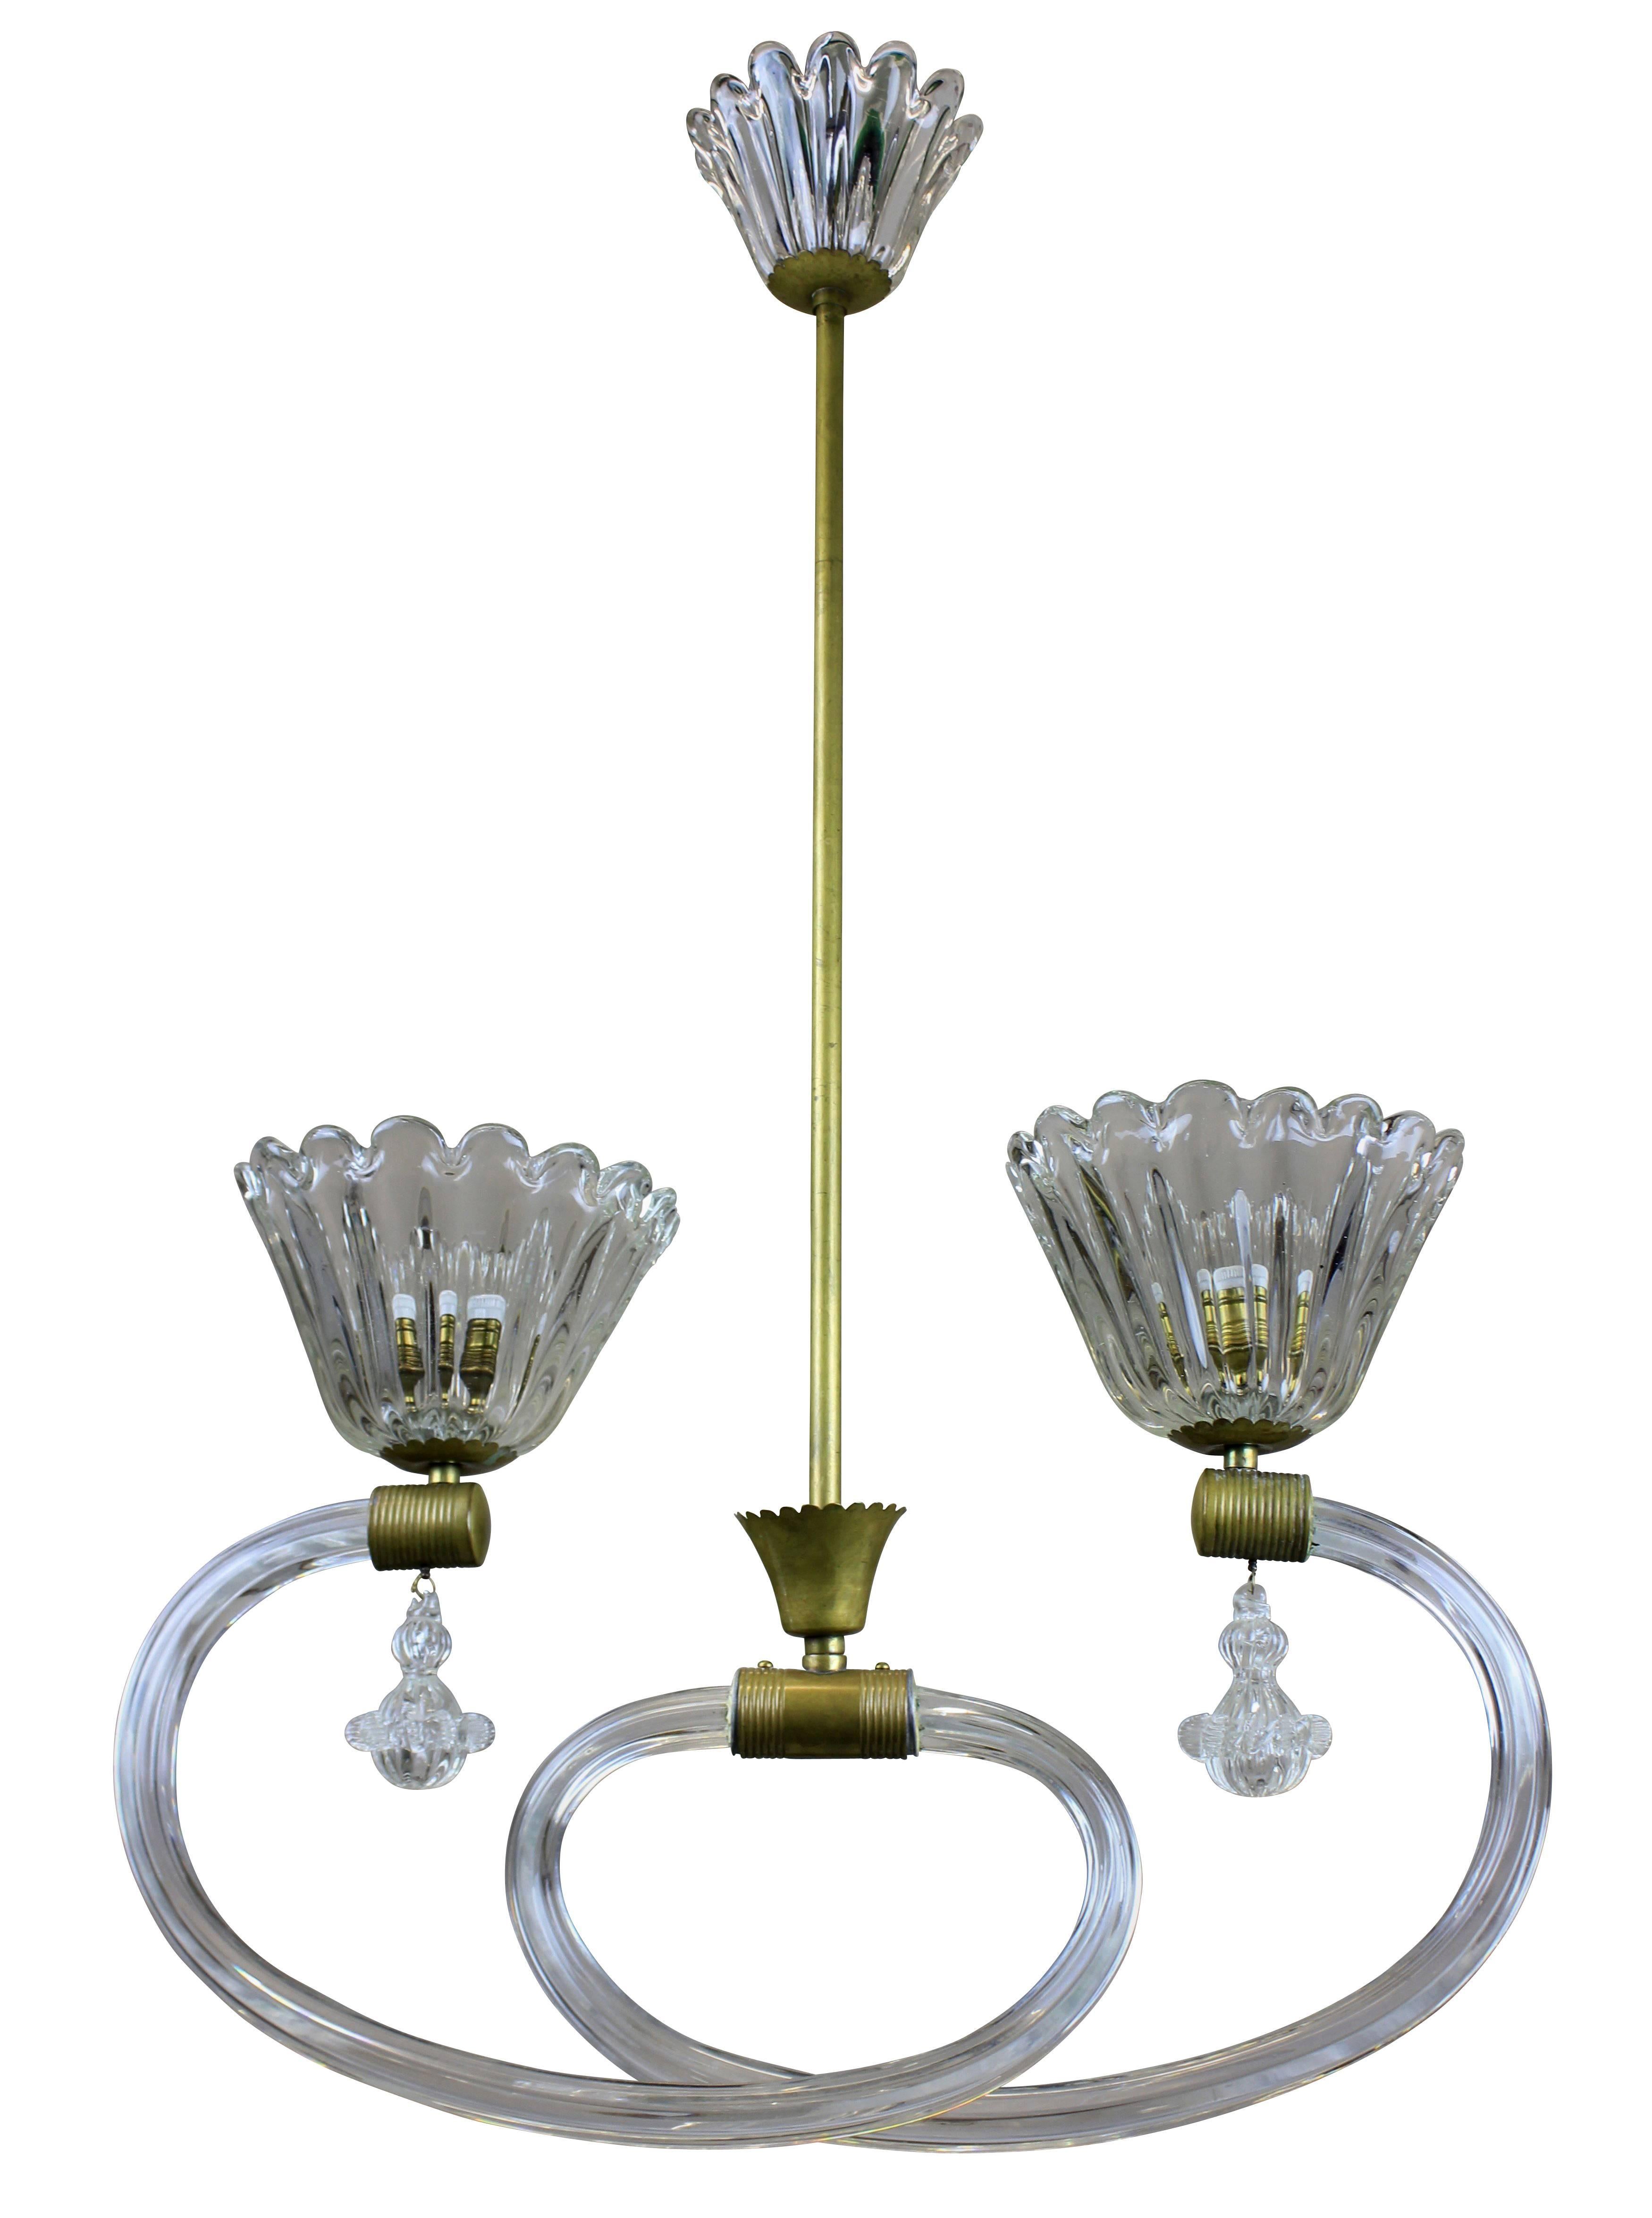 An Italian pendant light by Barovier in brass and handblown glass.